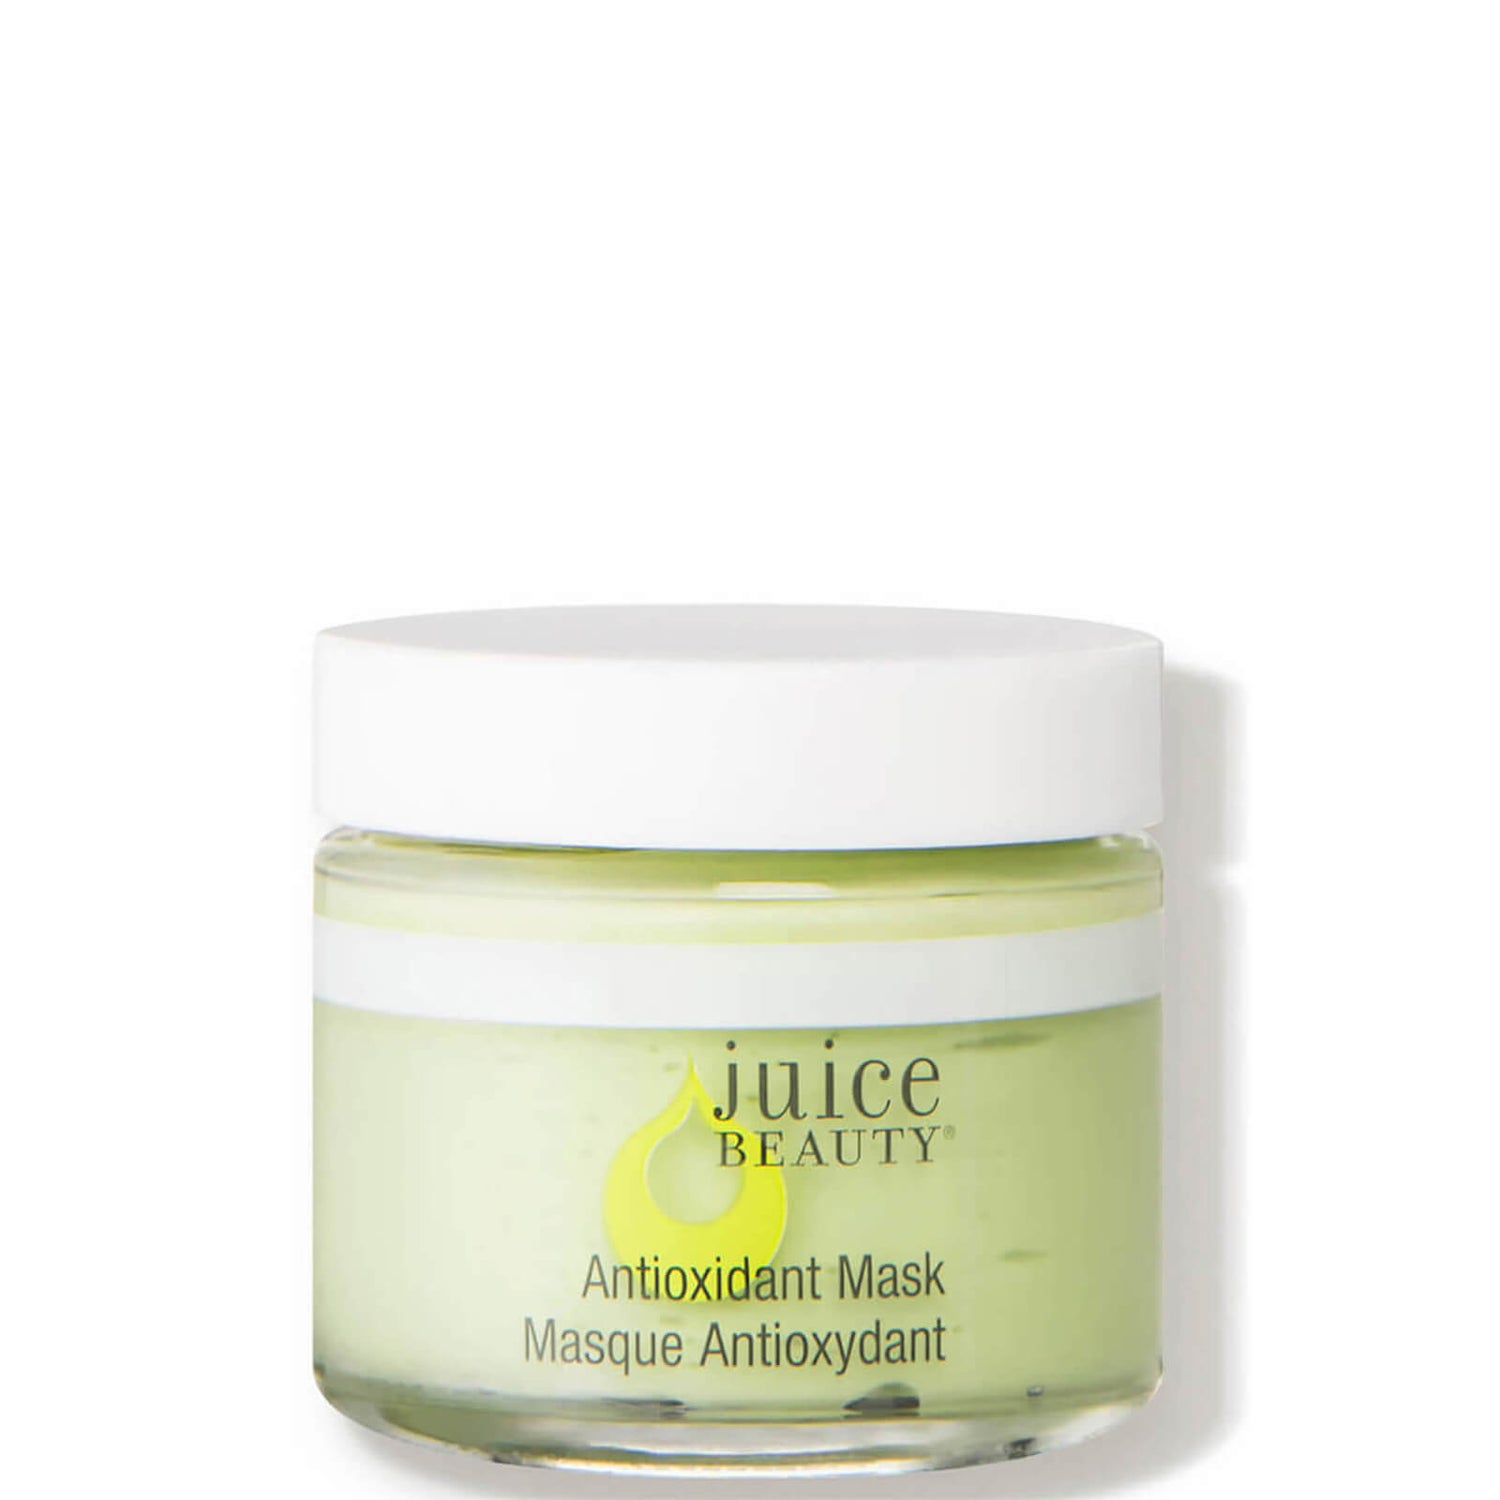 Juice Beauty Antioxidant Mask (2 fl. oz.)